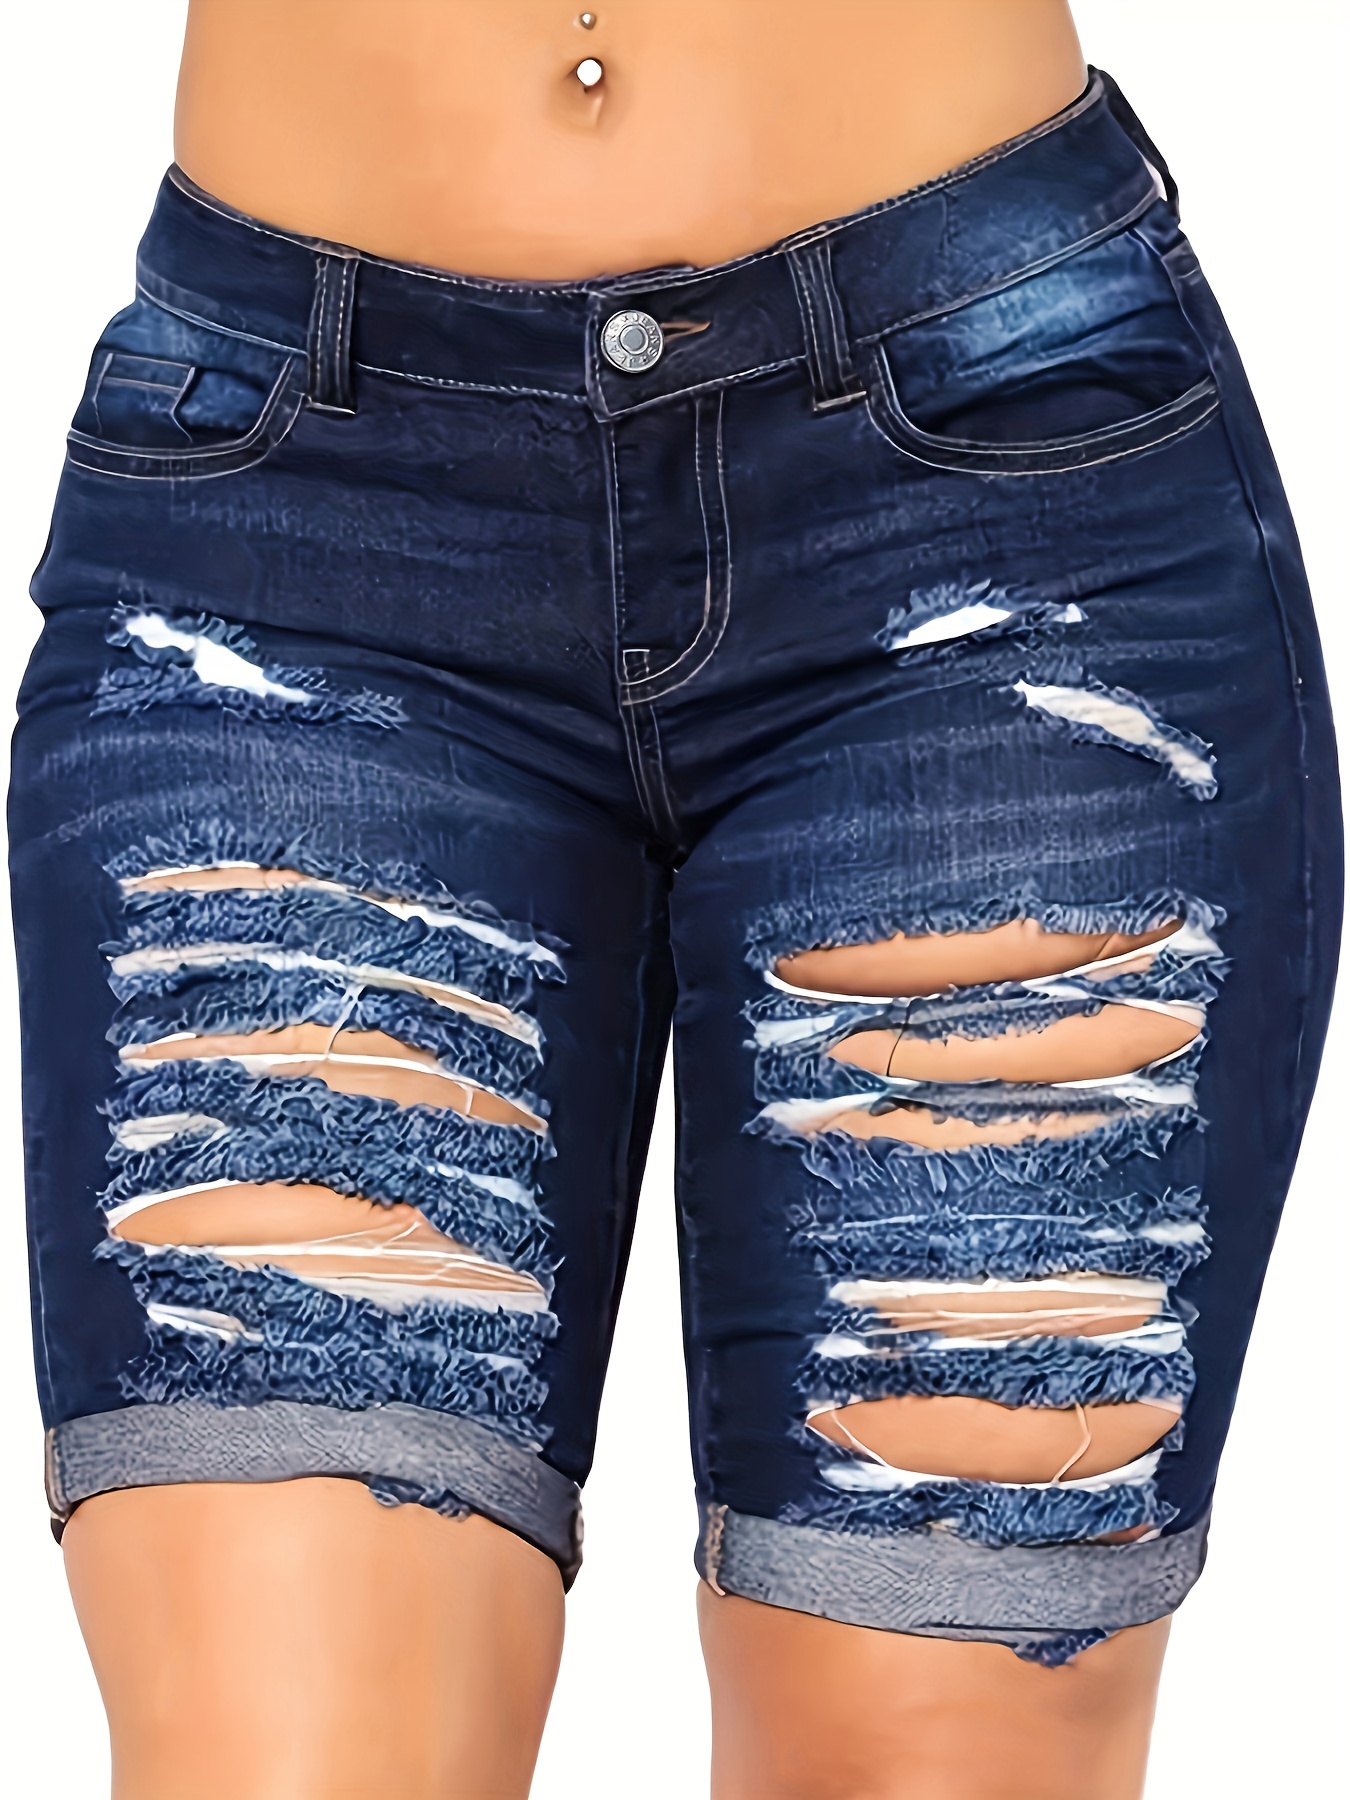 Denim shorts women's hot pants - Tailor Shop Dubai